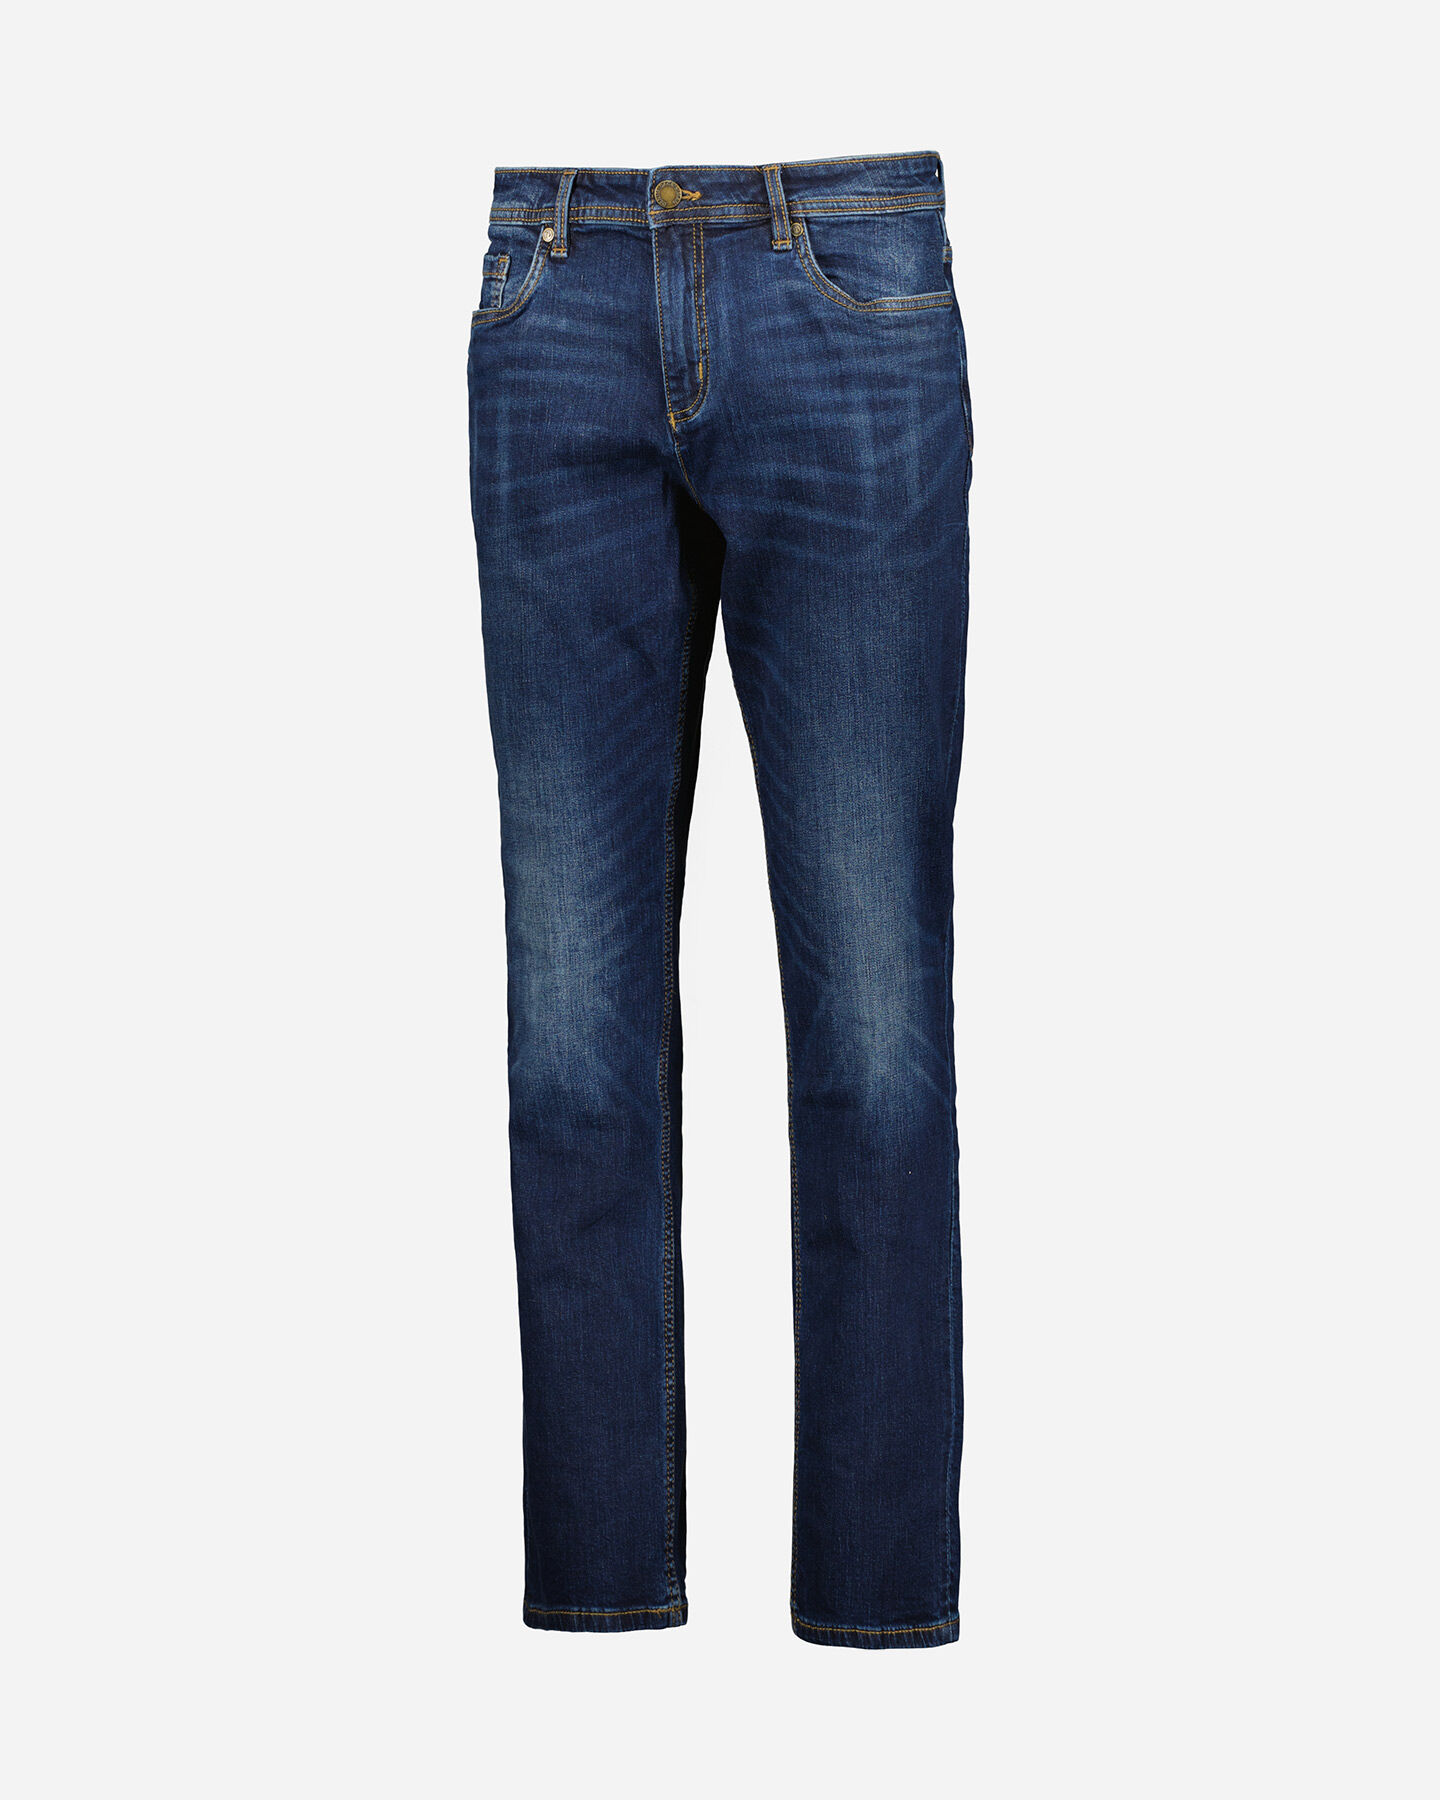  Jeans DACK'S CASUAL CITY M S4106780|DD|54 scatto 4